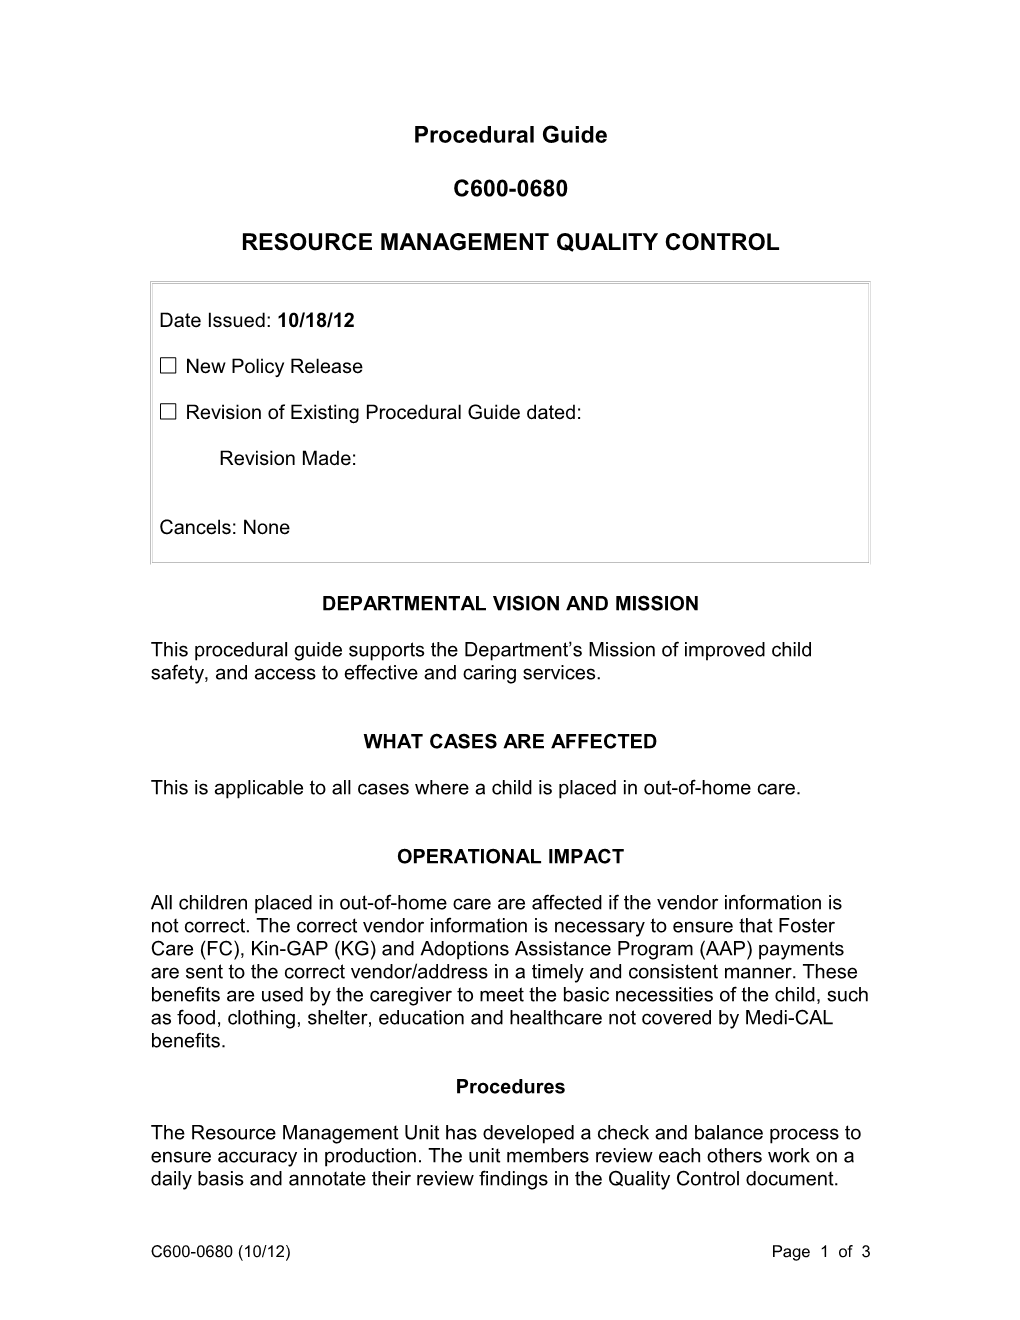 C600-0680, Resource Management Quality Control